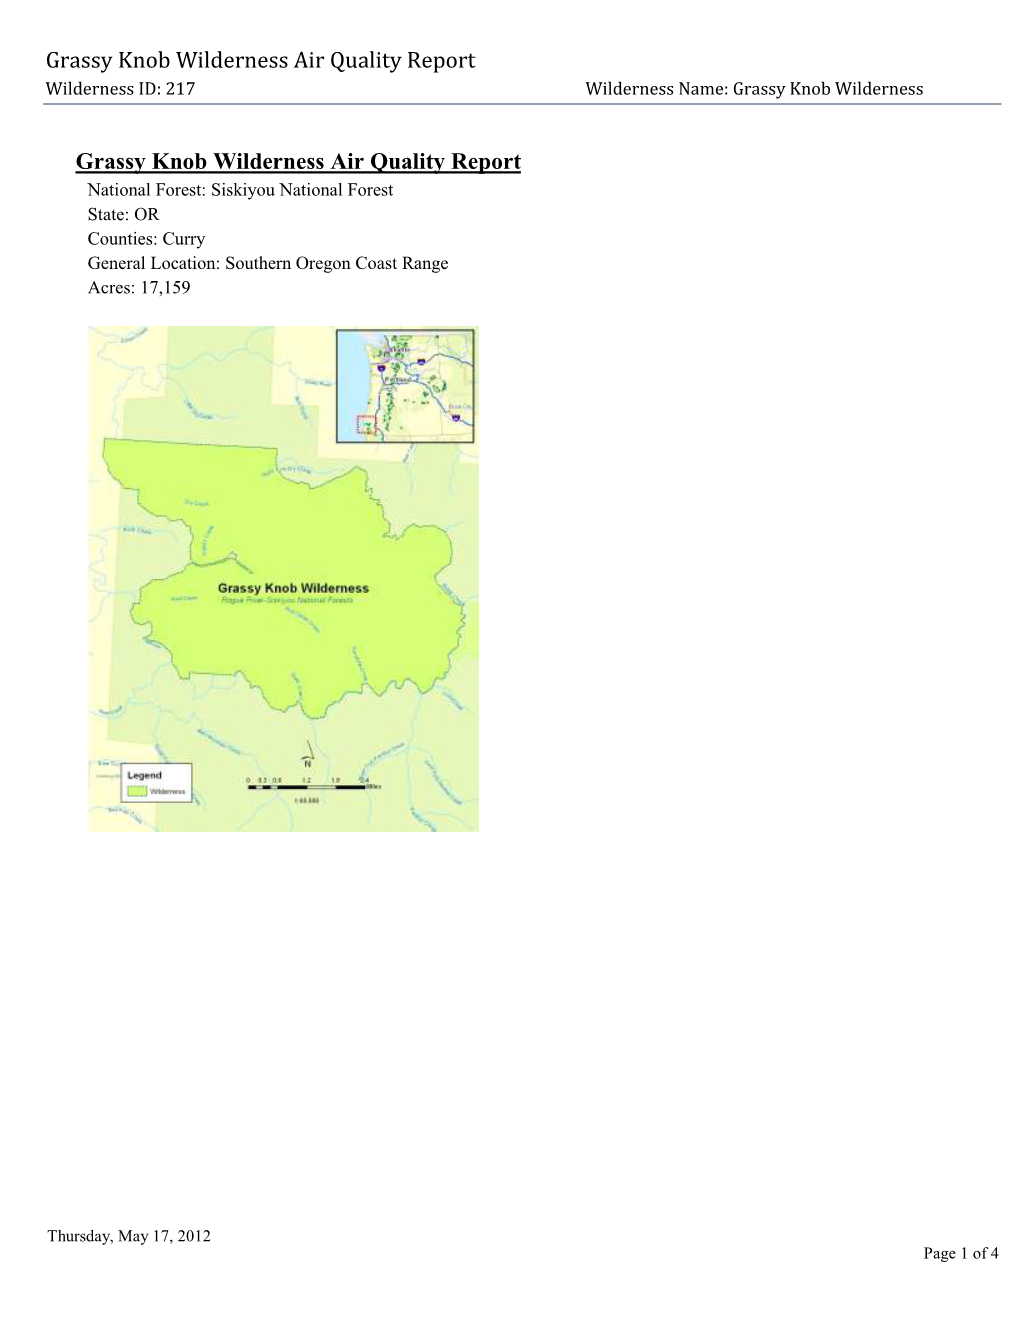 Grassy Knob Wilderness Air Quality Report, 2012